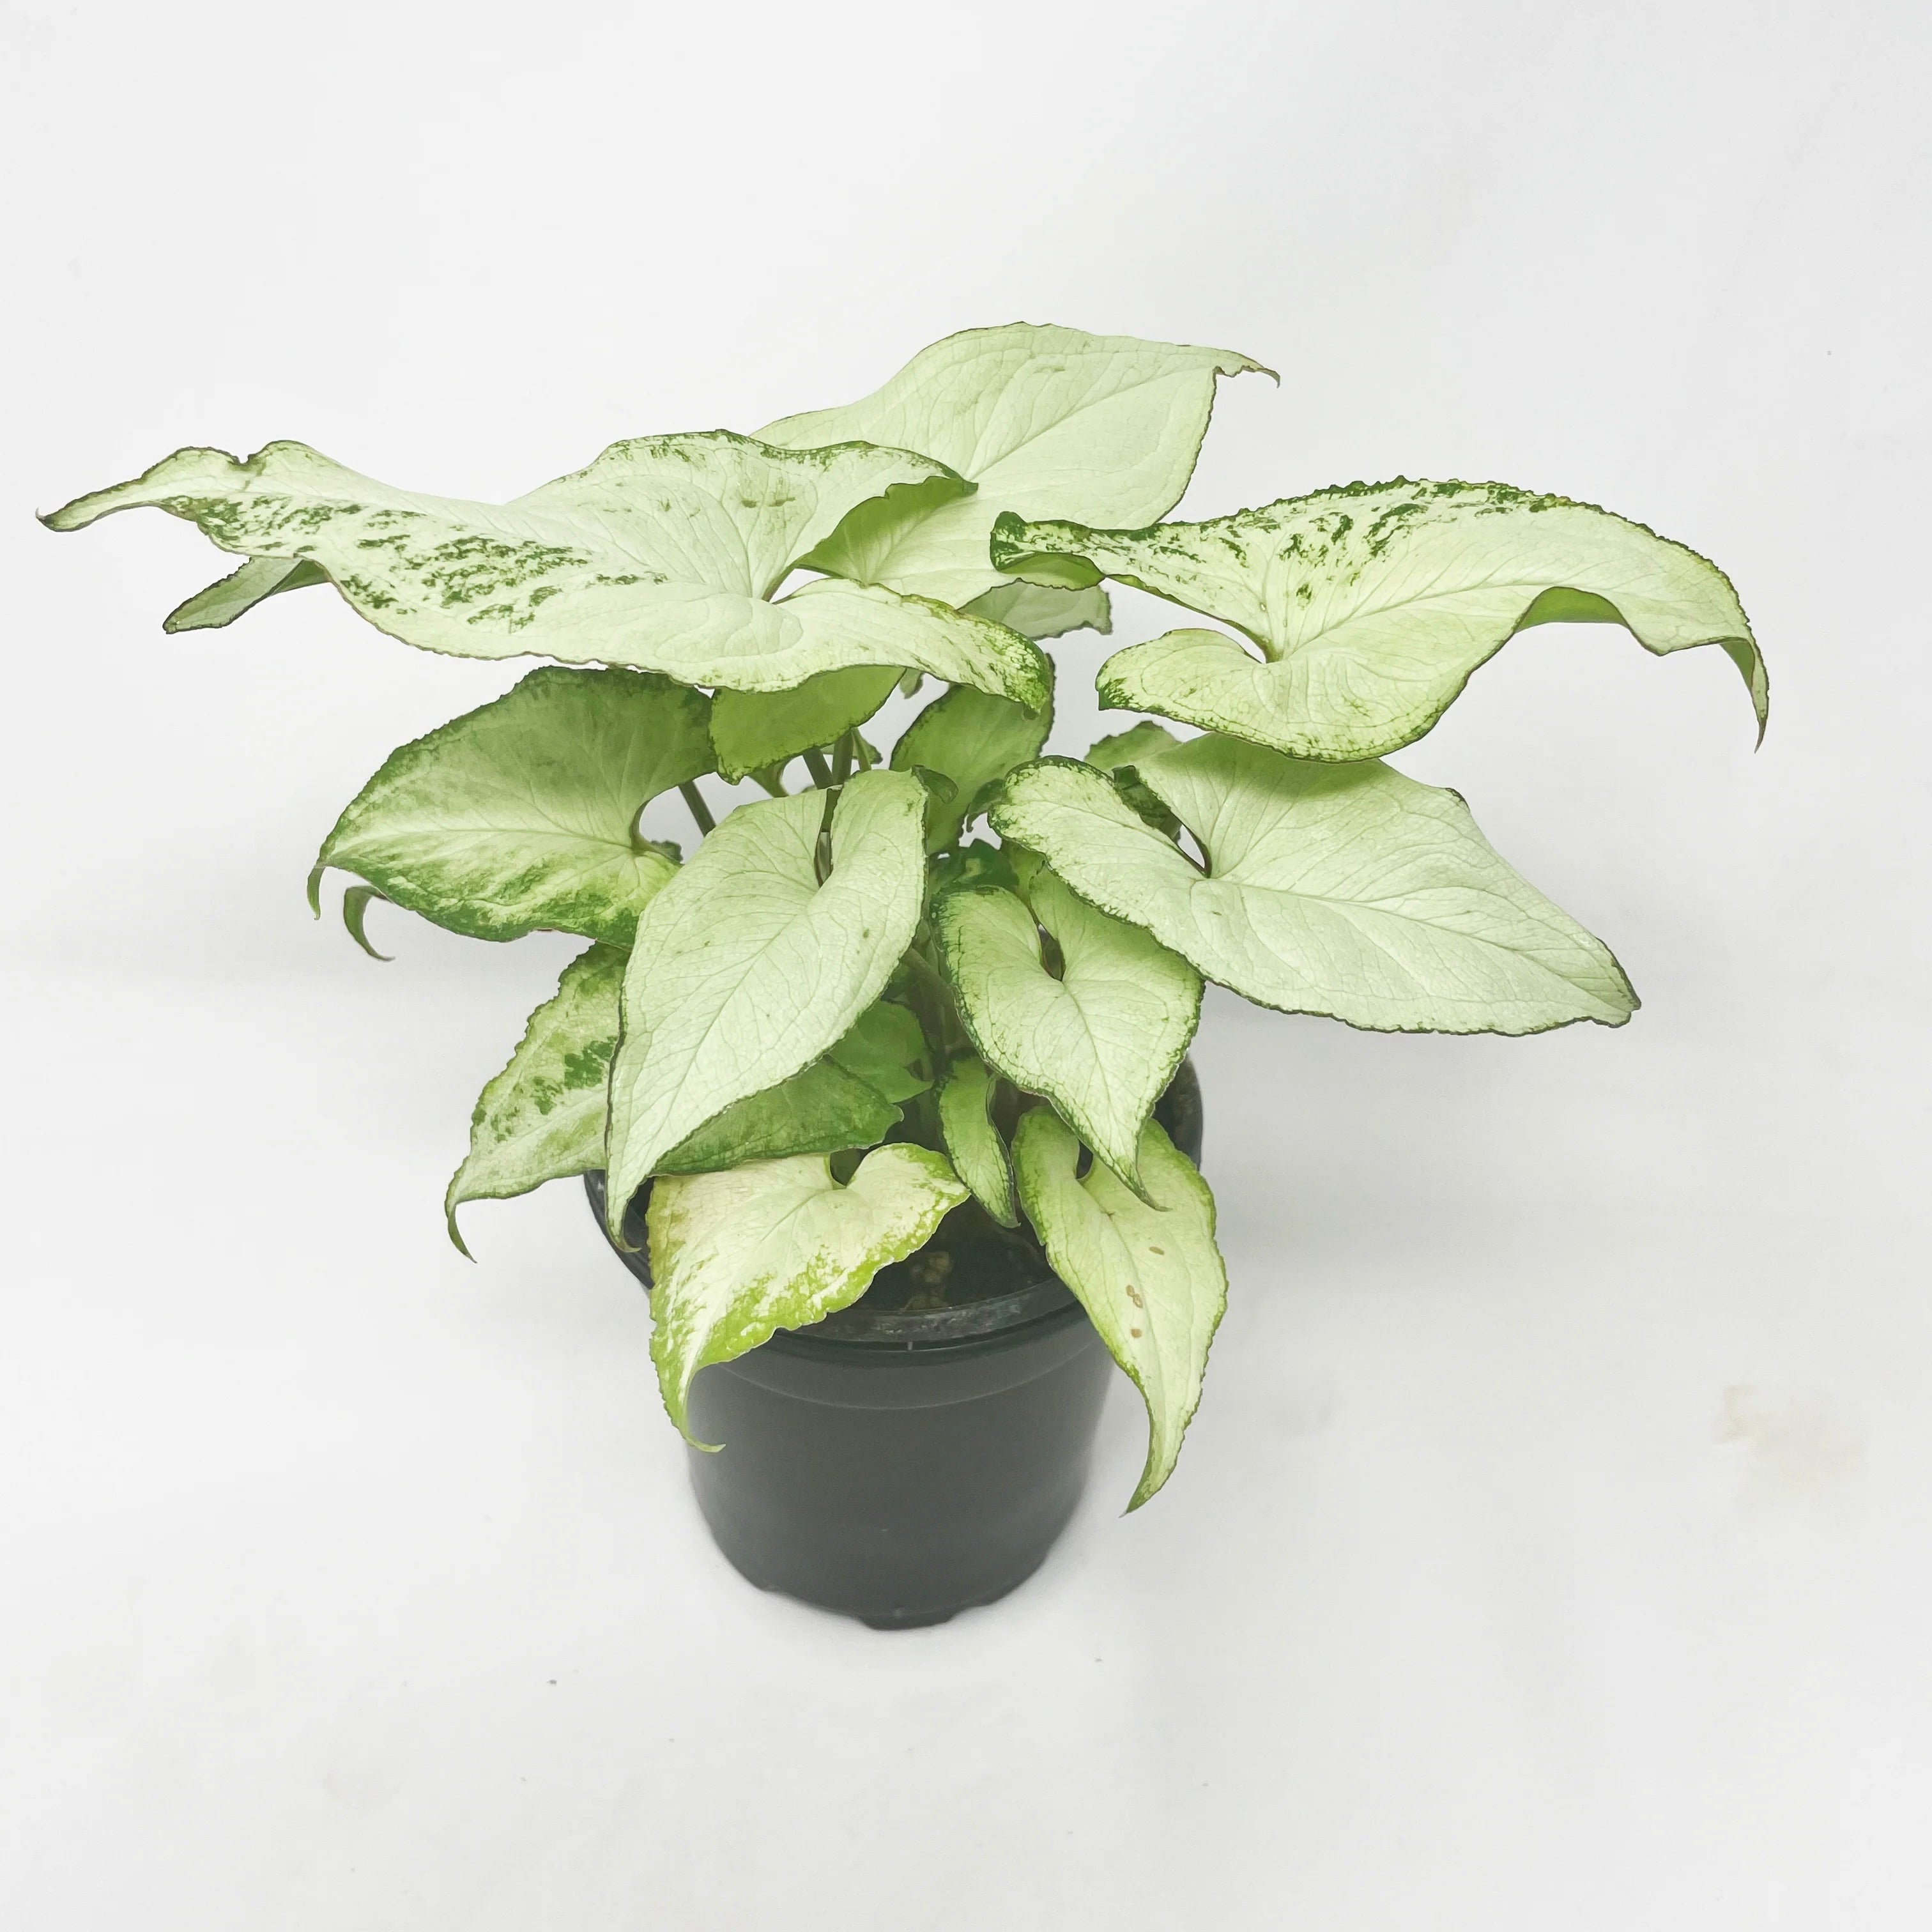 Syngonium podophyllum 'Holly' - Arrowhead Plant